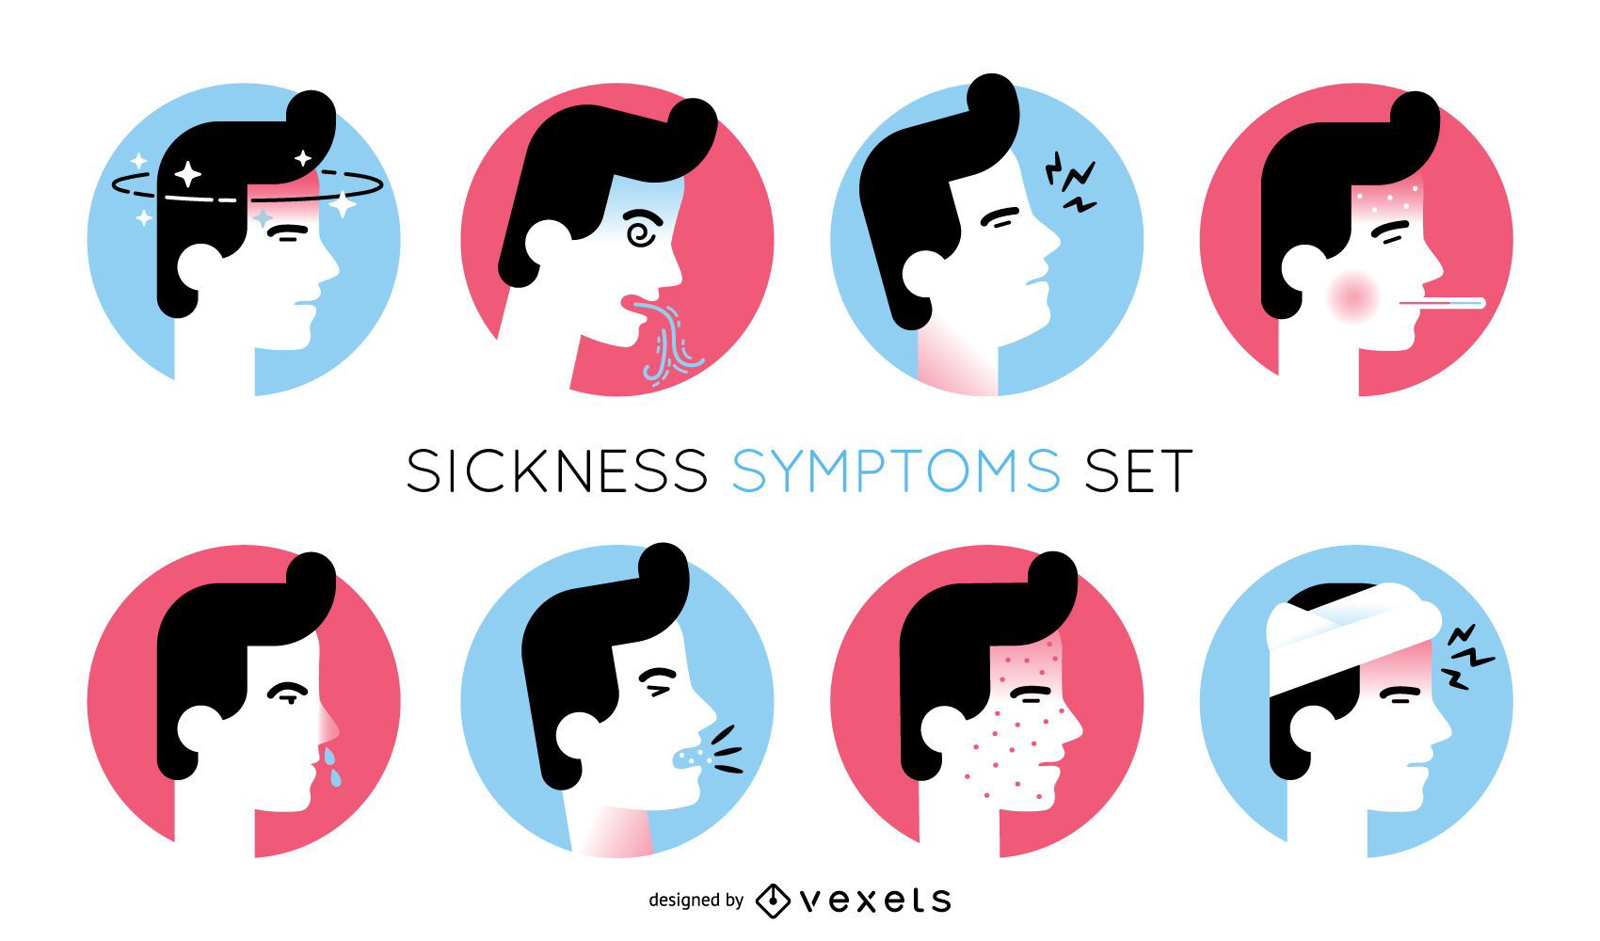 Sickness symptoms illustration set